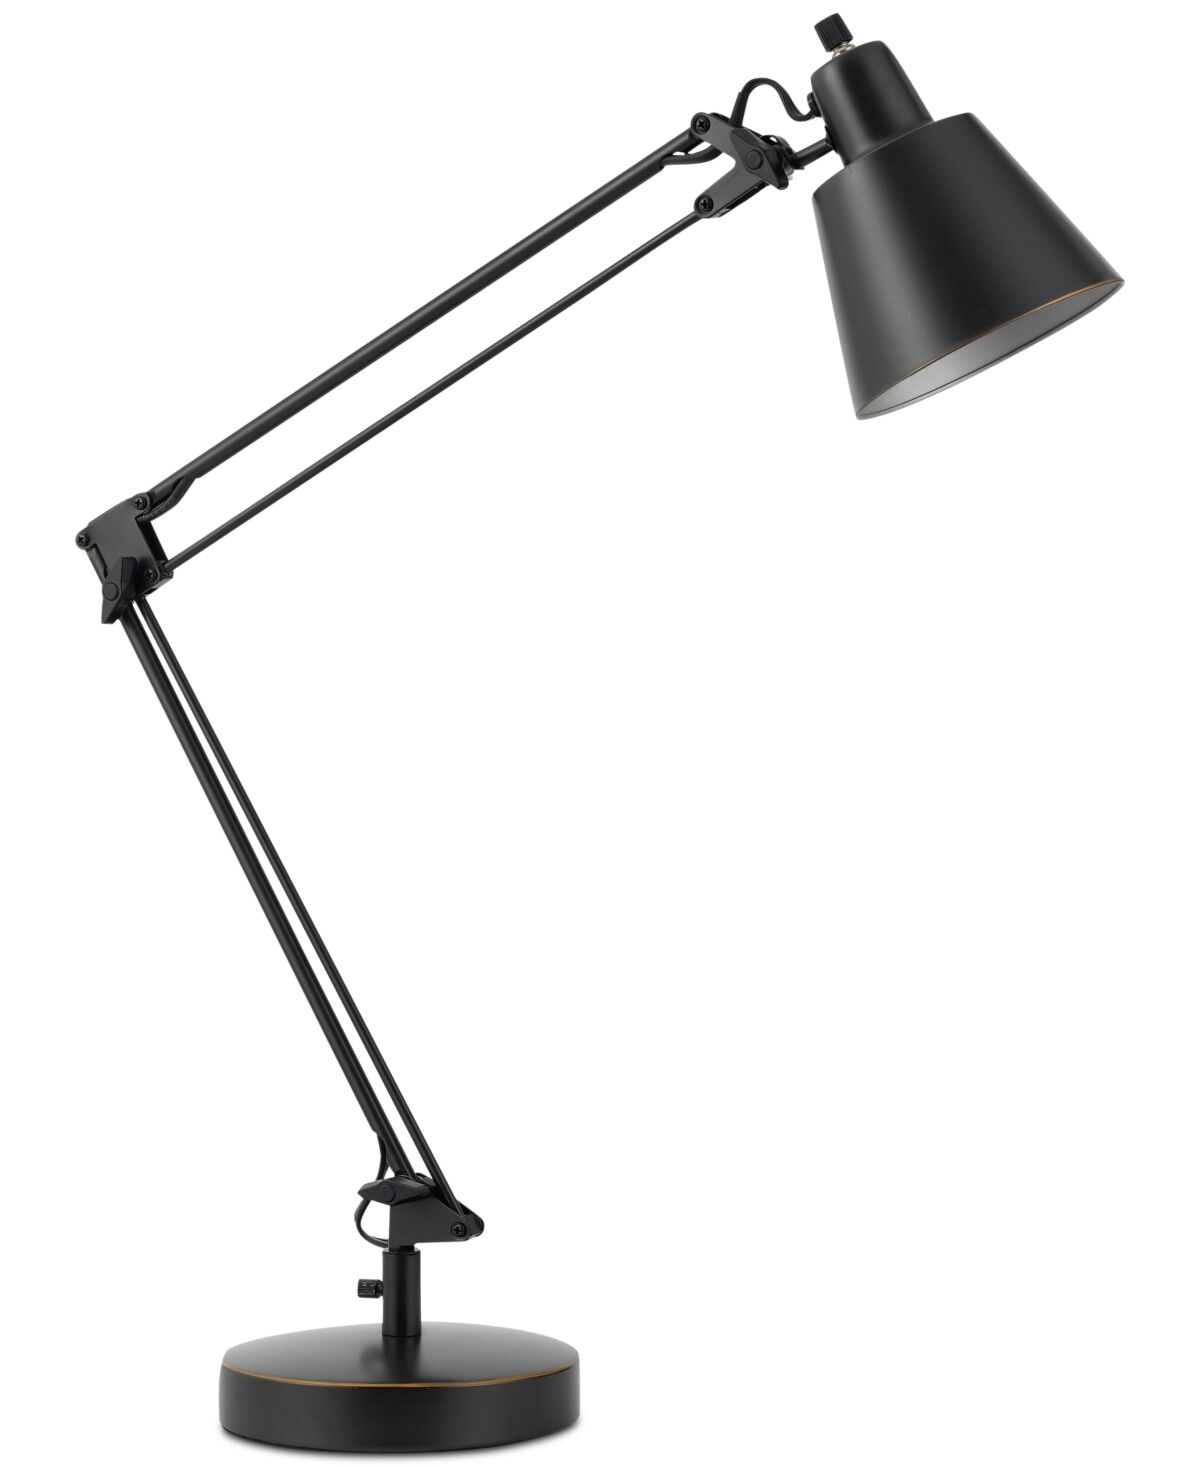 Cal Lighting Udbina Desk Lamp with Adjustable Arms - Dark Bronze